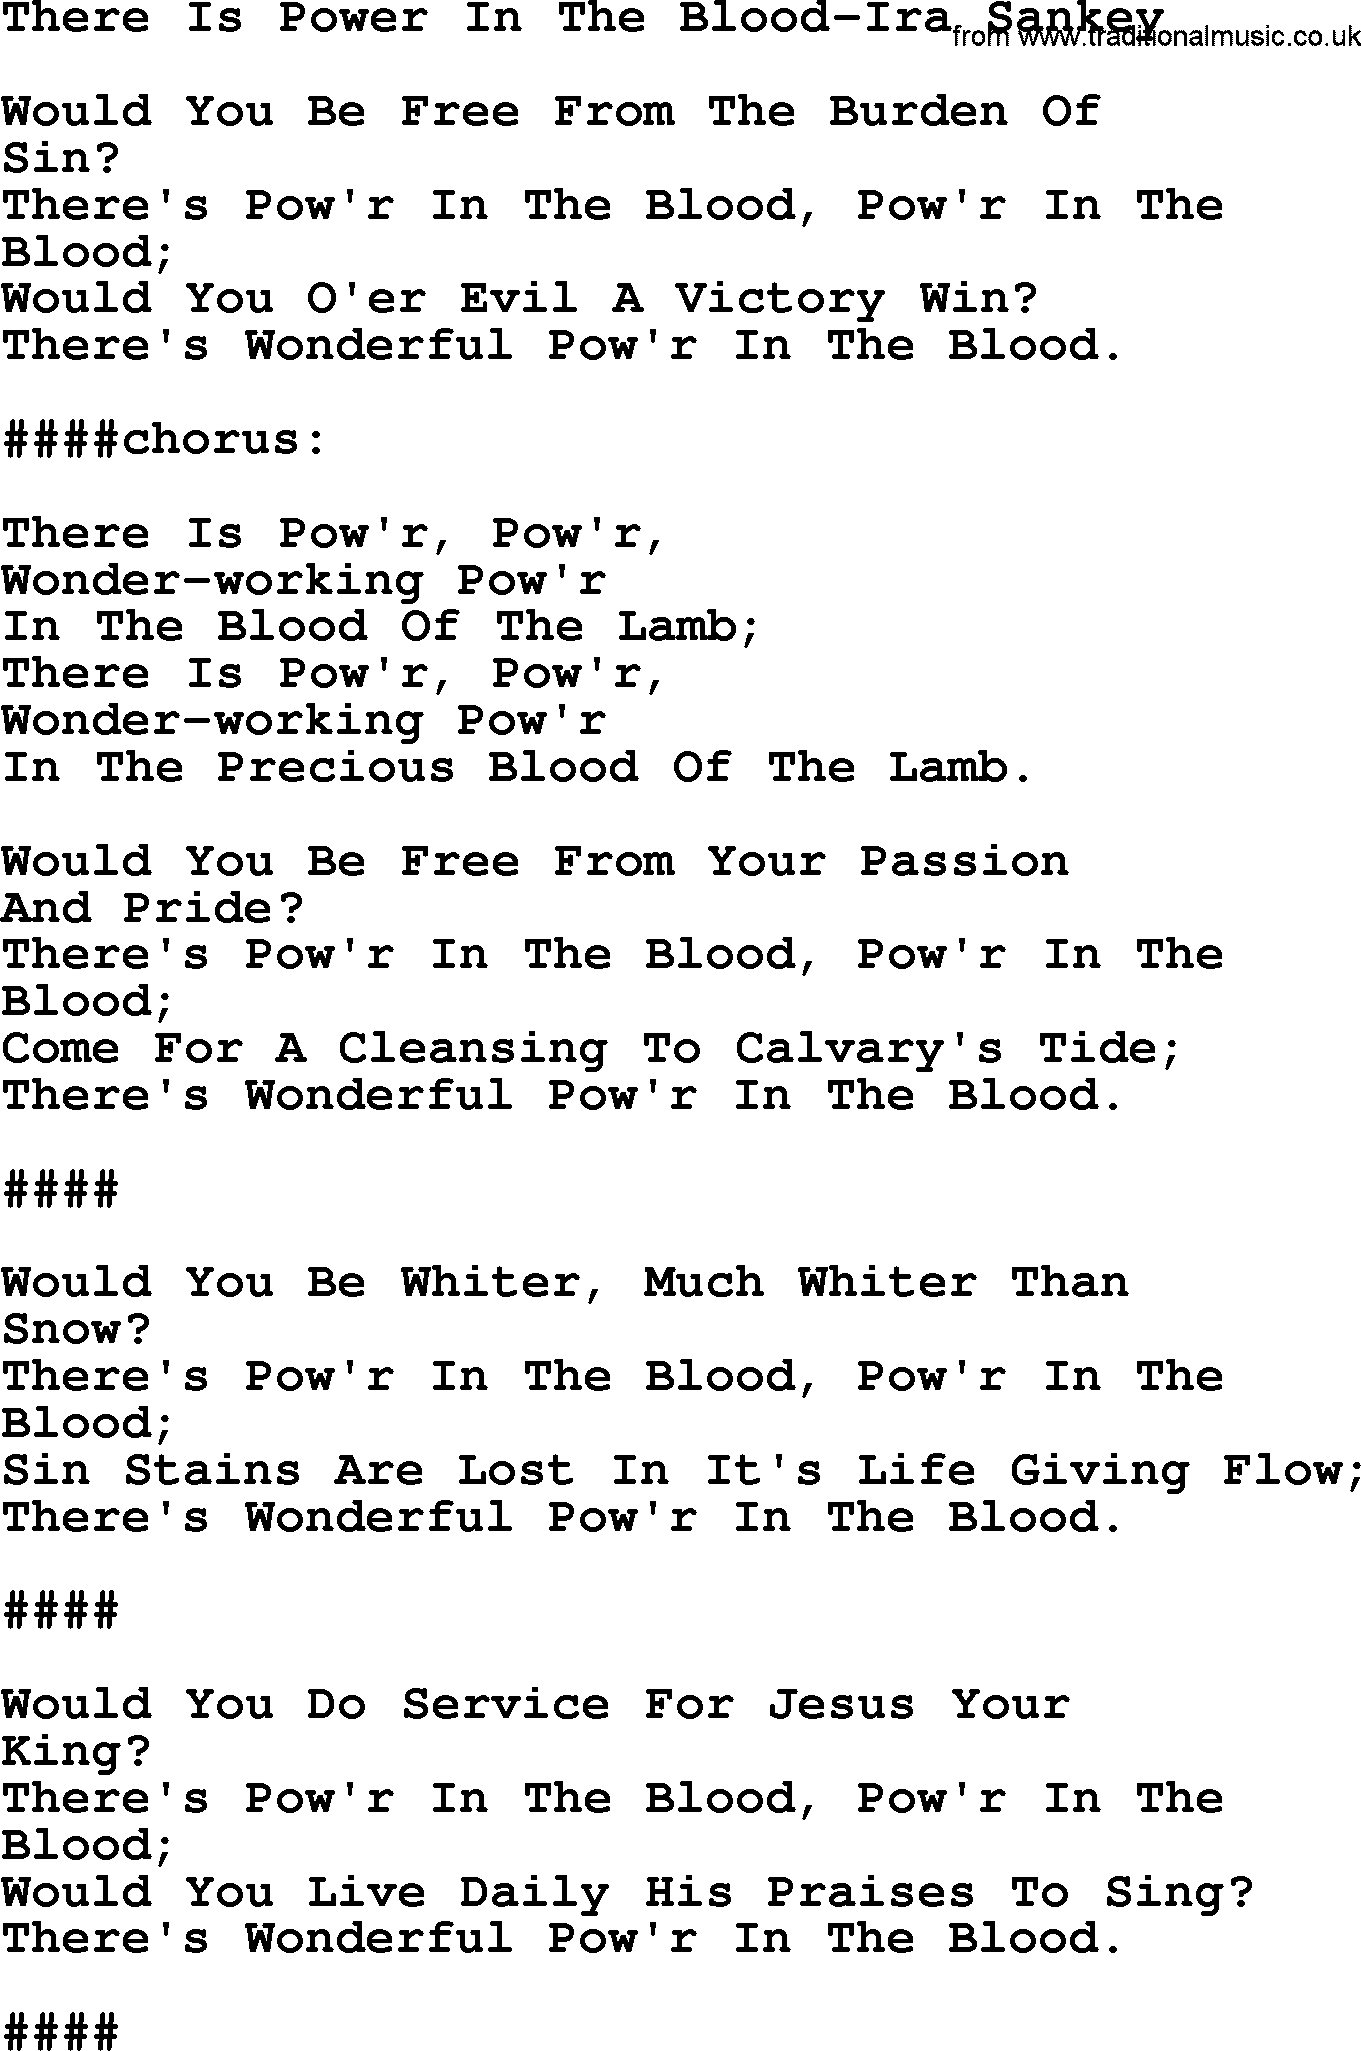 Ira Sankey hymn: There Is Power In The Blood-Ira Sankey, lyrics